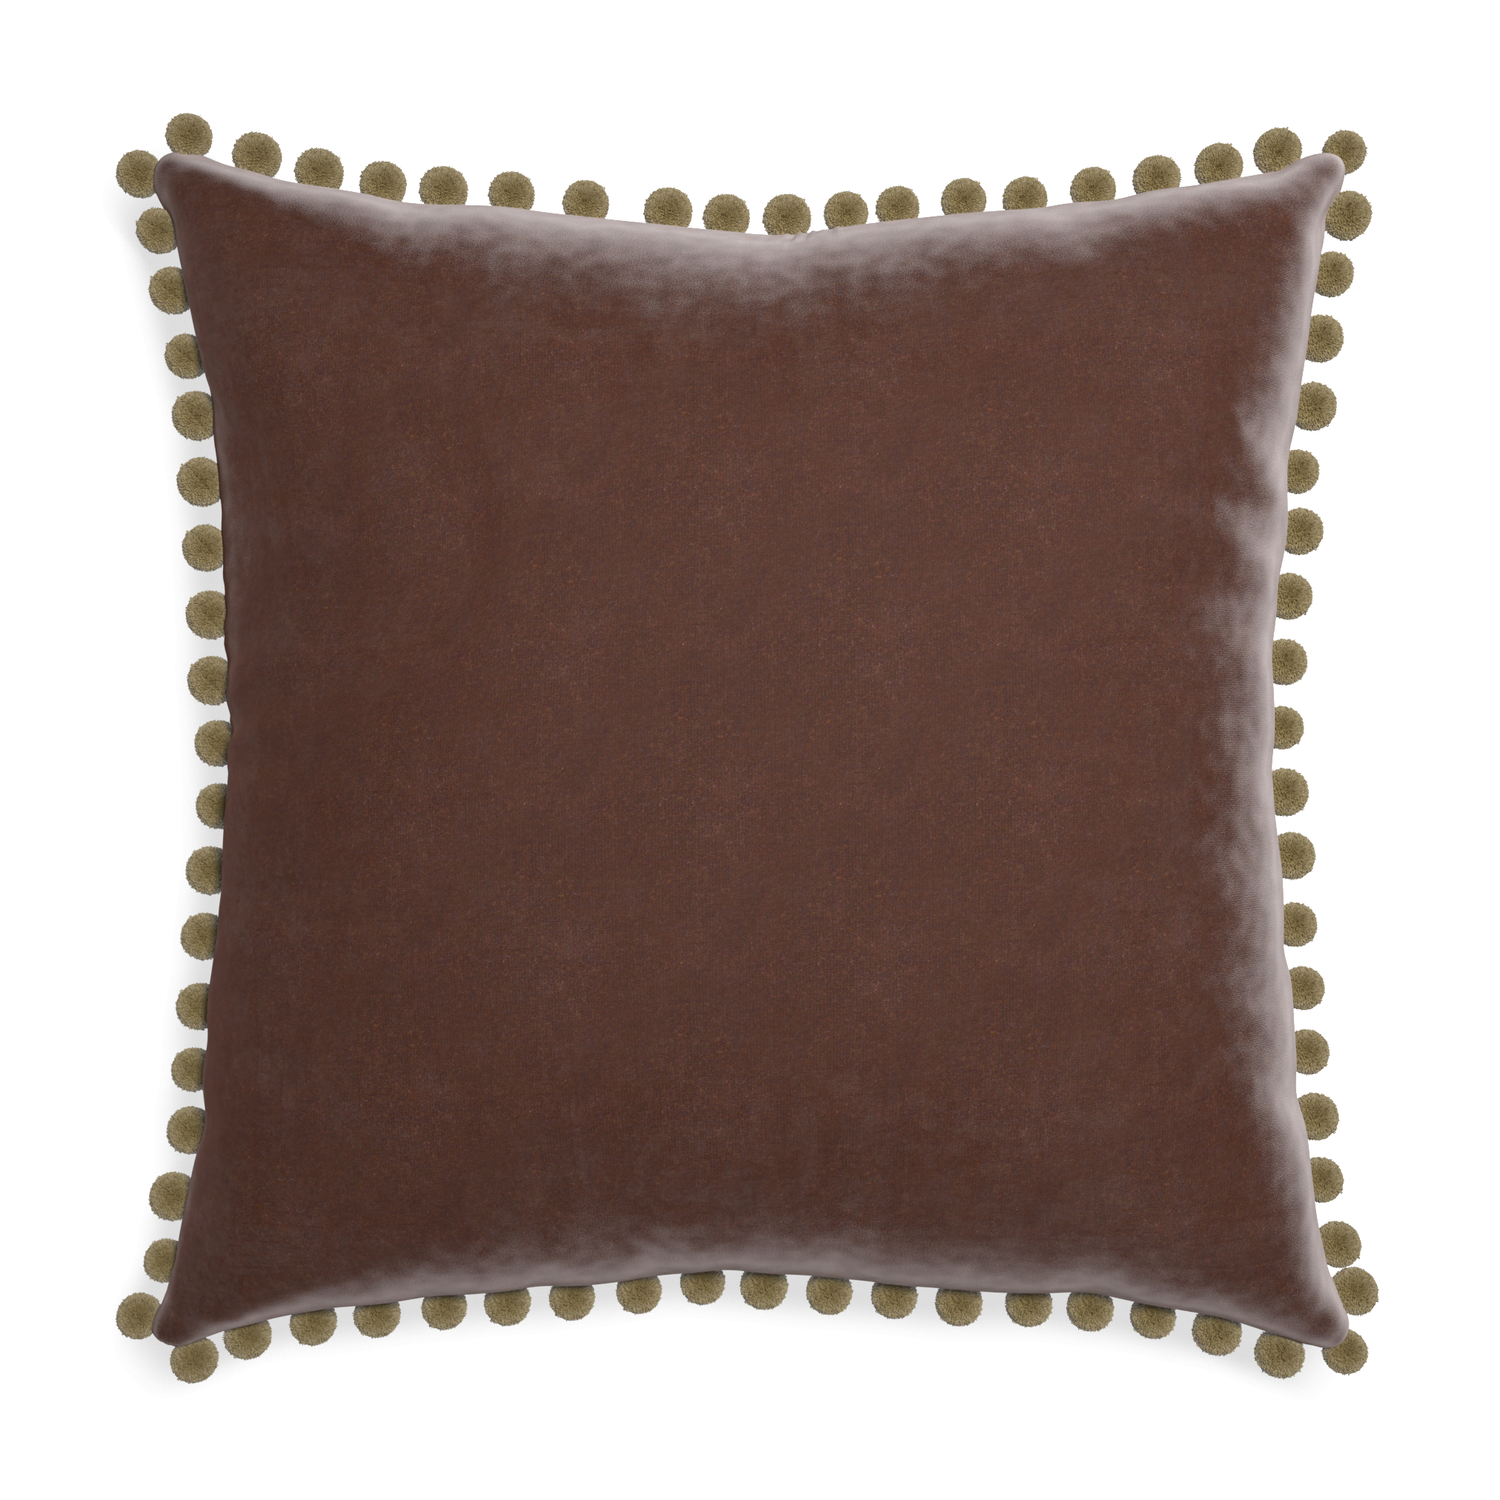 Euro-sham walnut velvet custom pillow with olive pom pom on white background